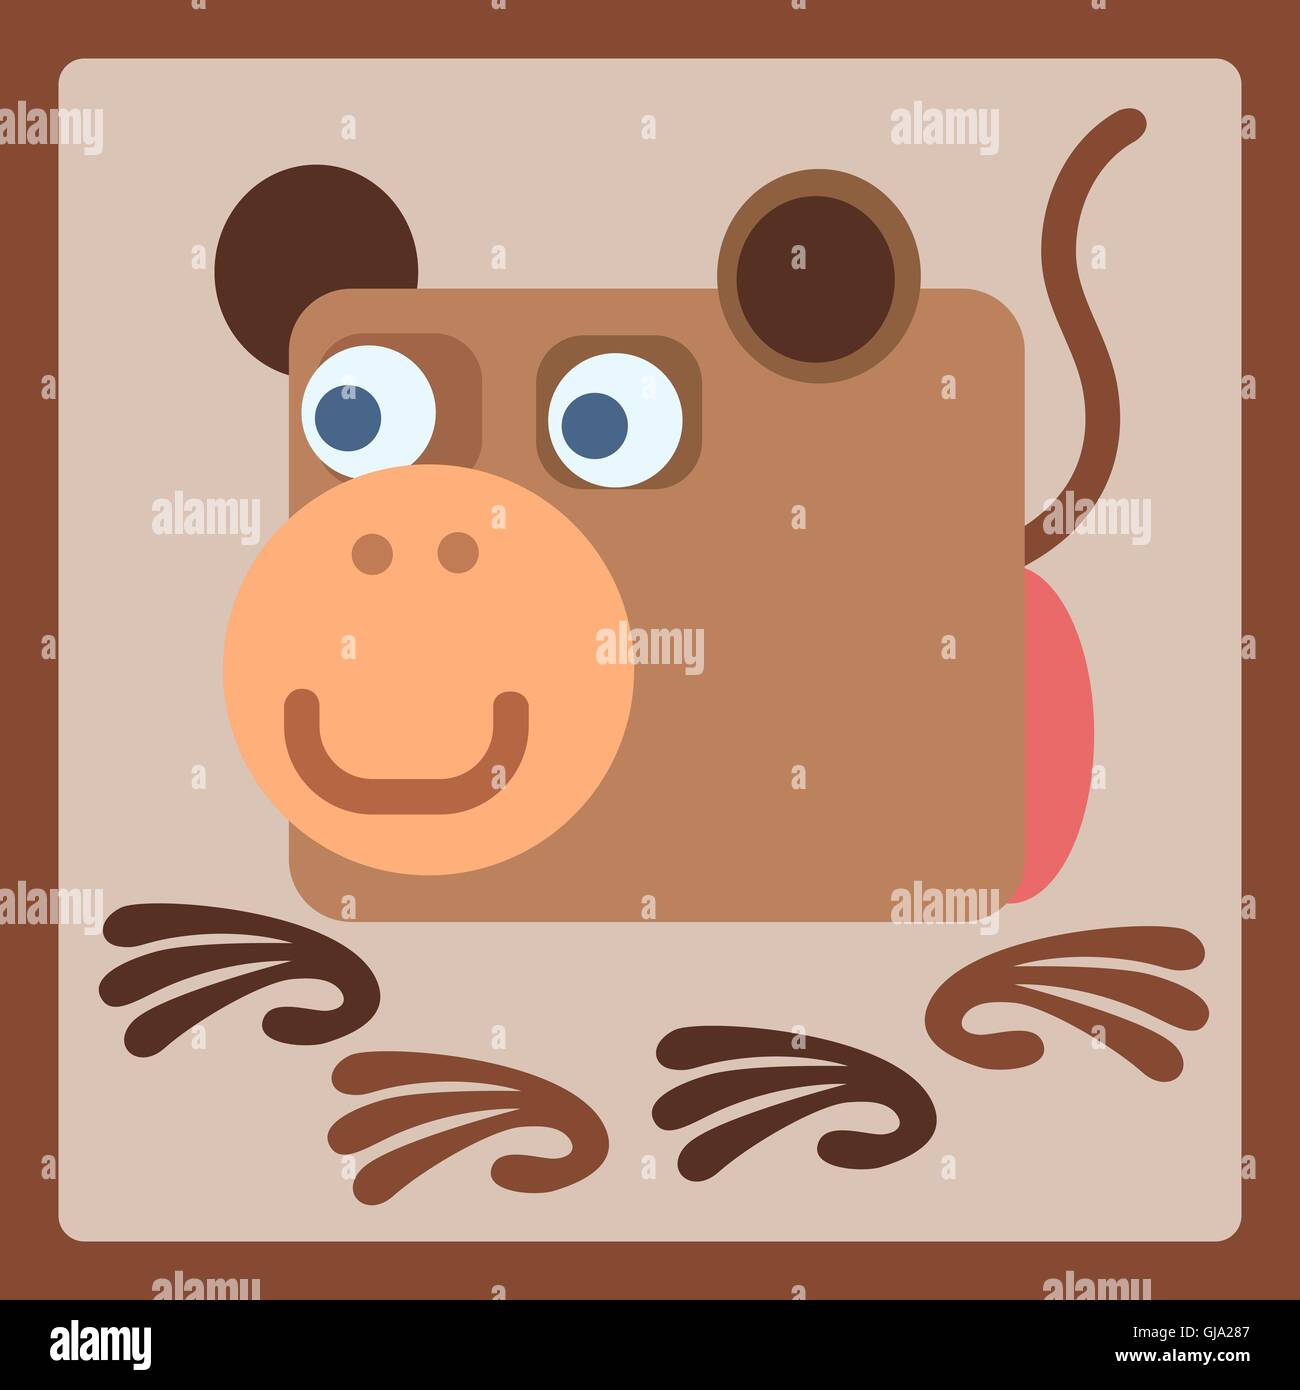 monkey stylized cartoon icon Stock Vector